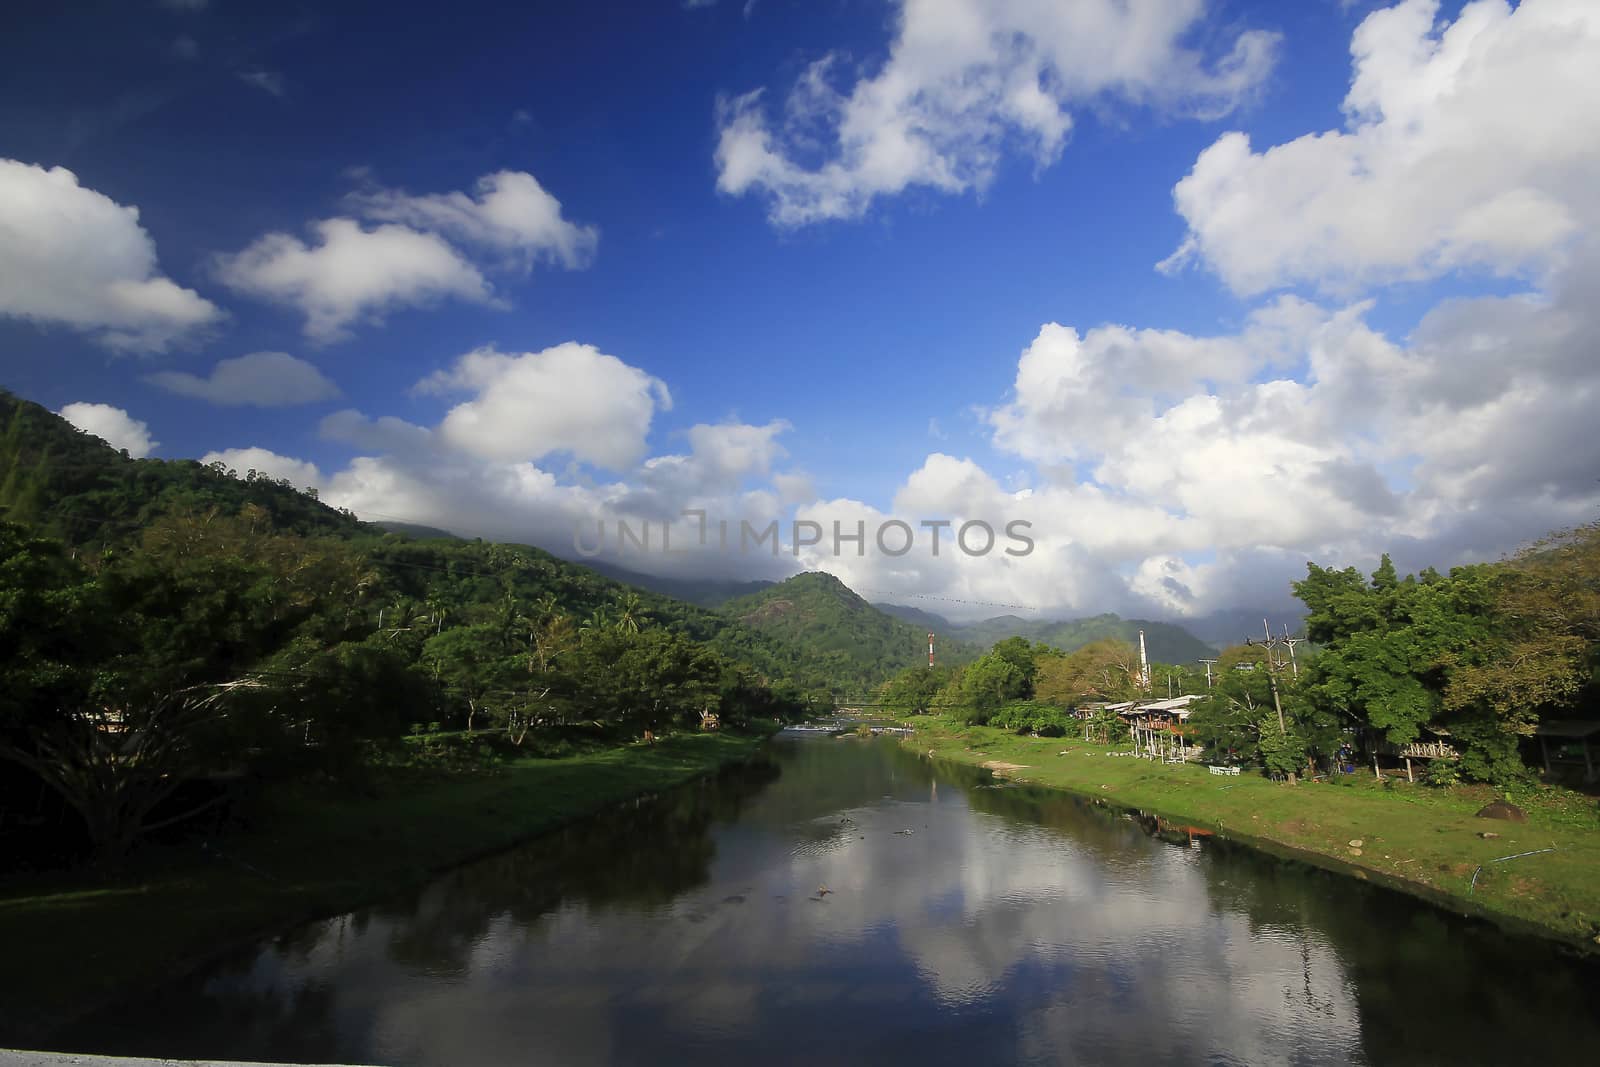 River landscape flows down through the Khiriwong village in Thailand.